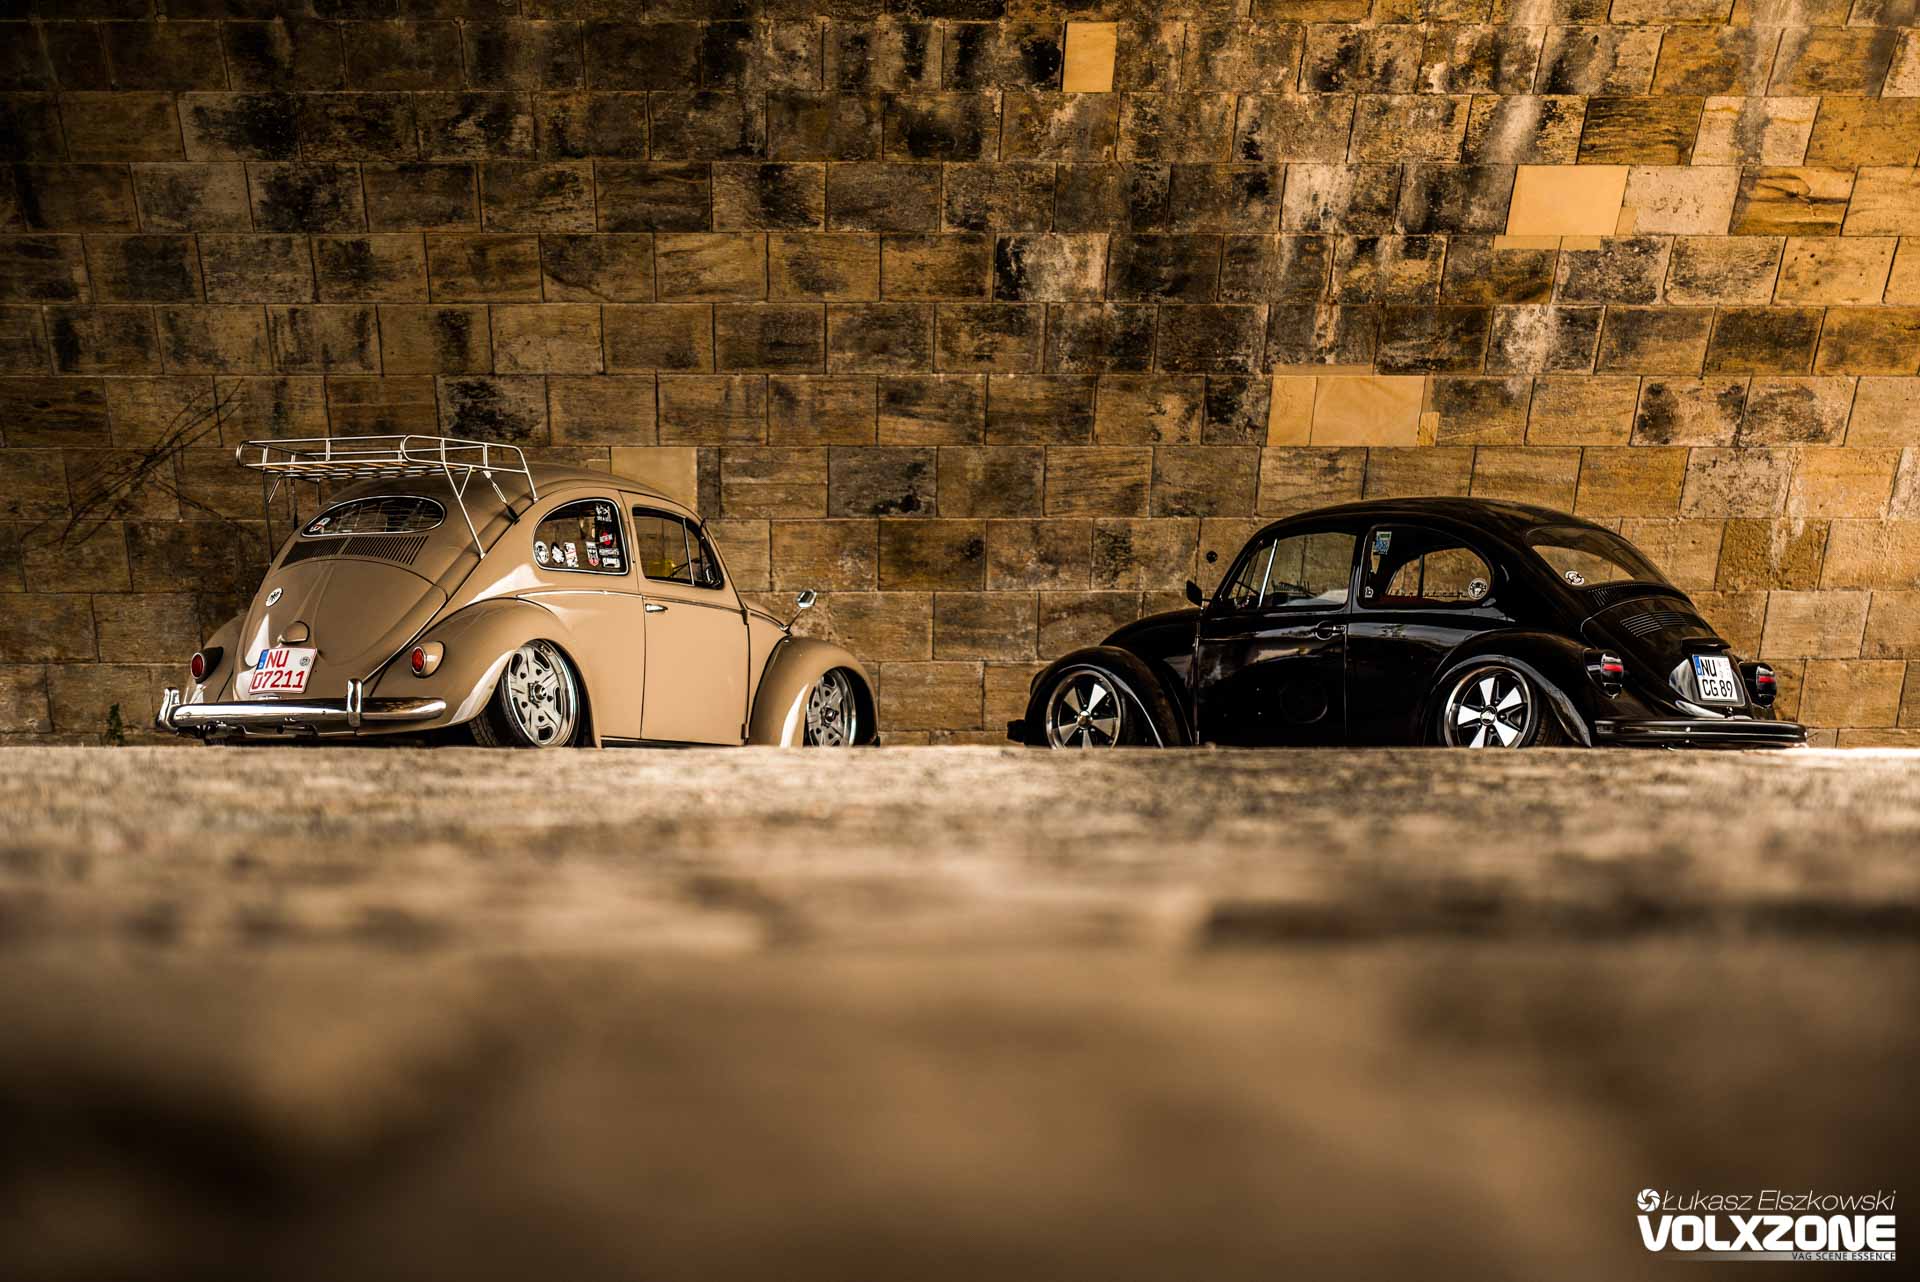 VW Beetle Oval 1200 Mex 1600